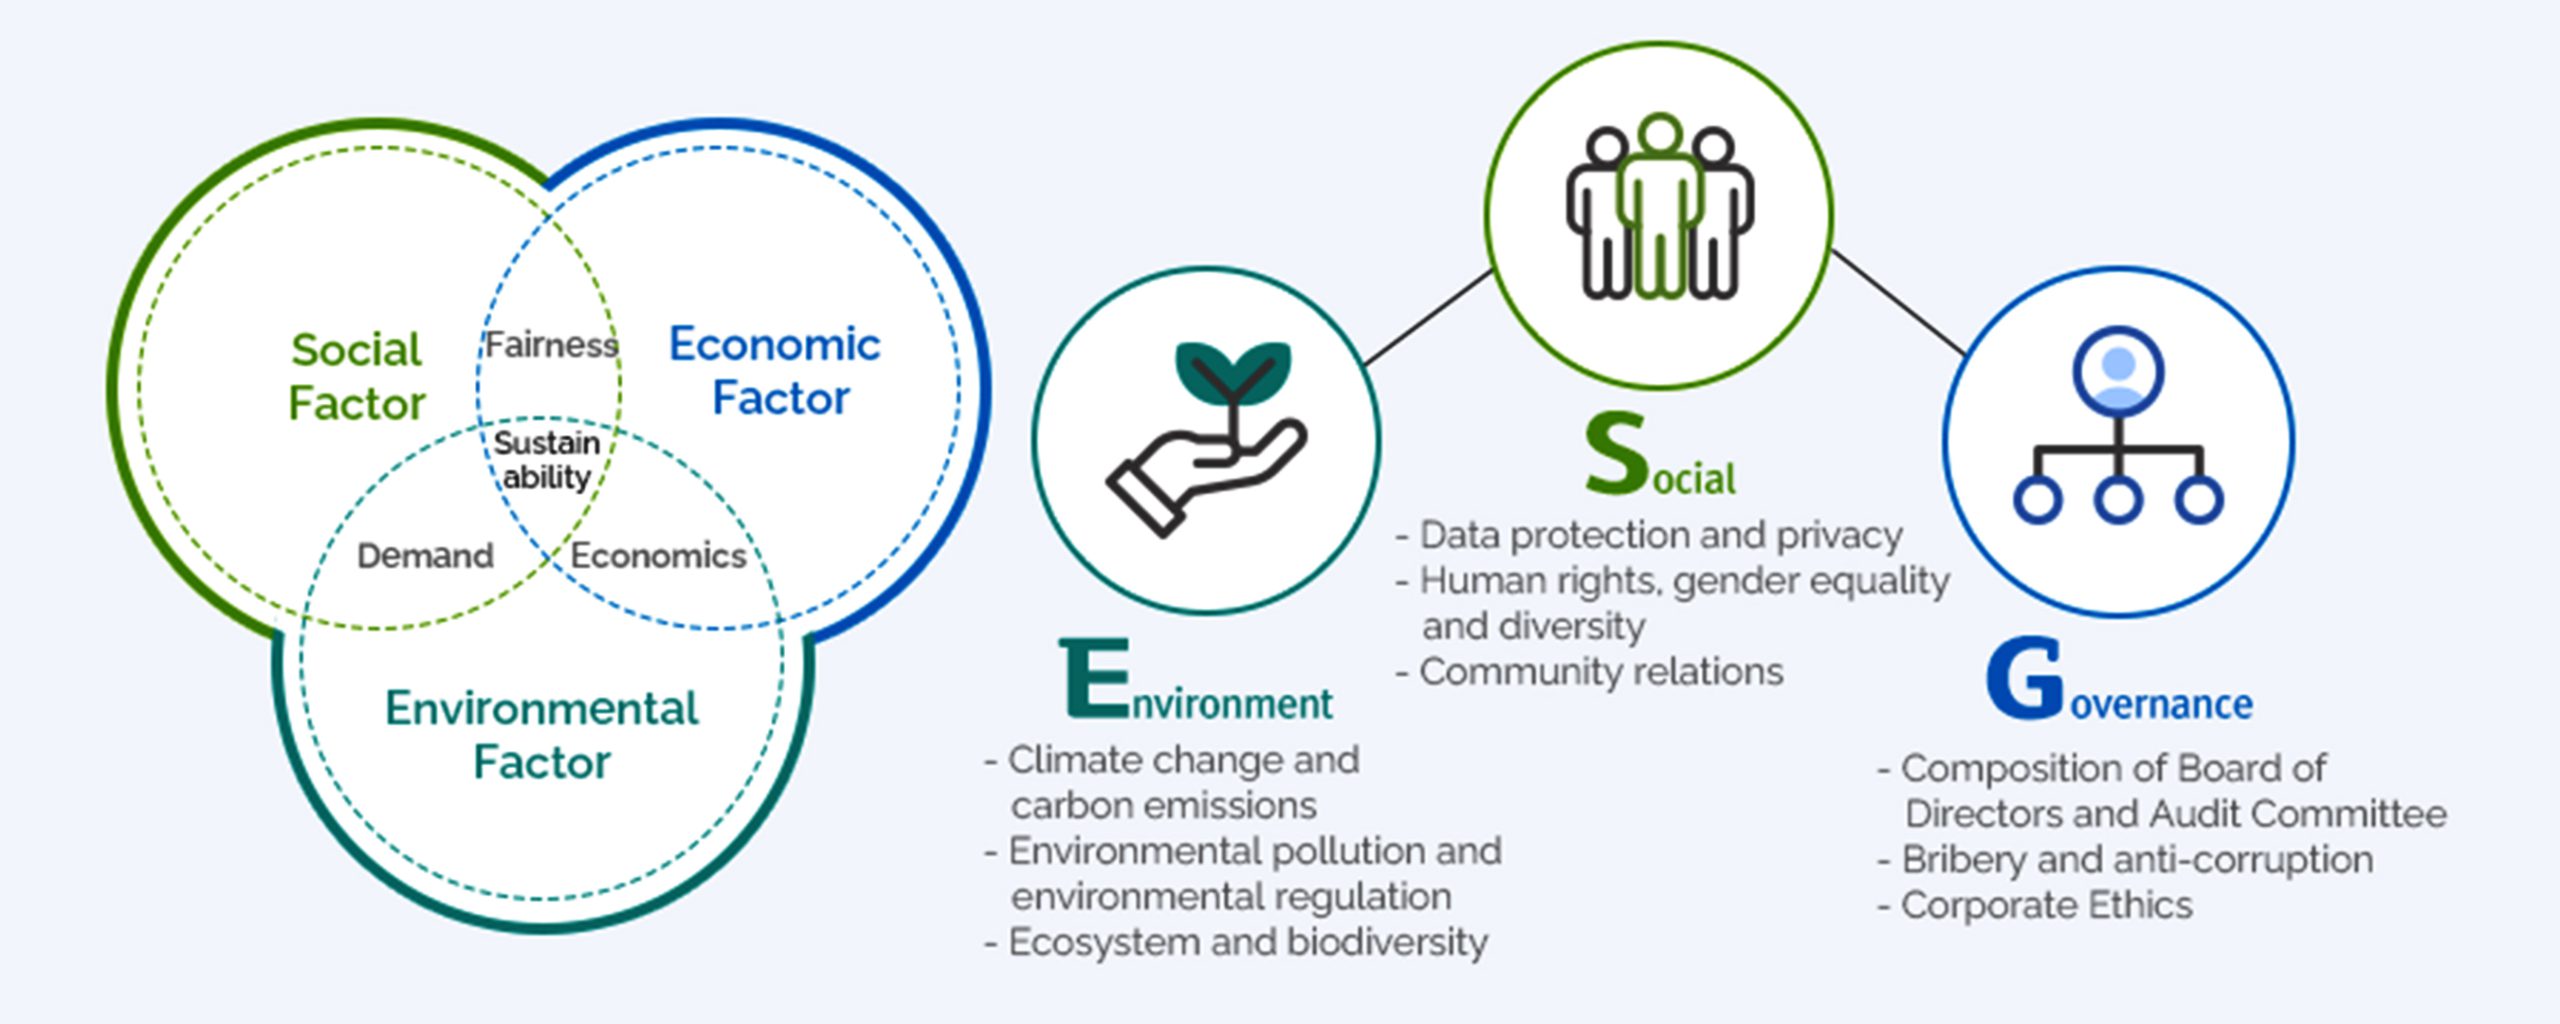 A venn diagram showing the social, economic, and environmental factors.